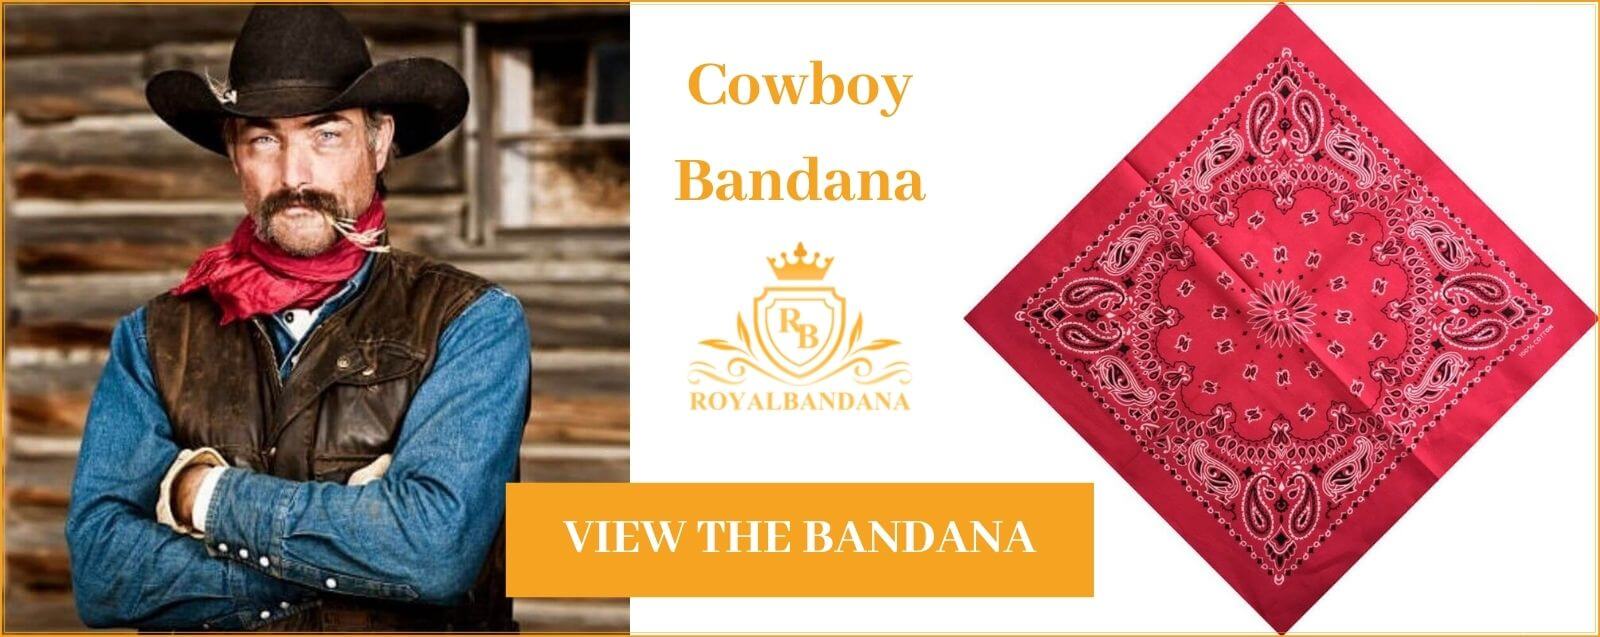  see red bandana cowboy royalbandana